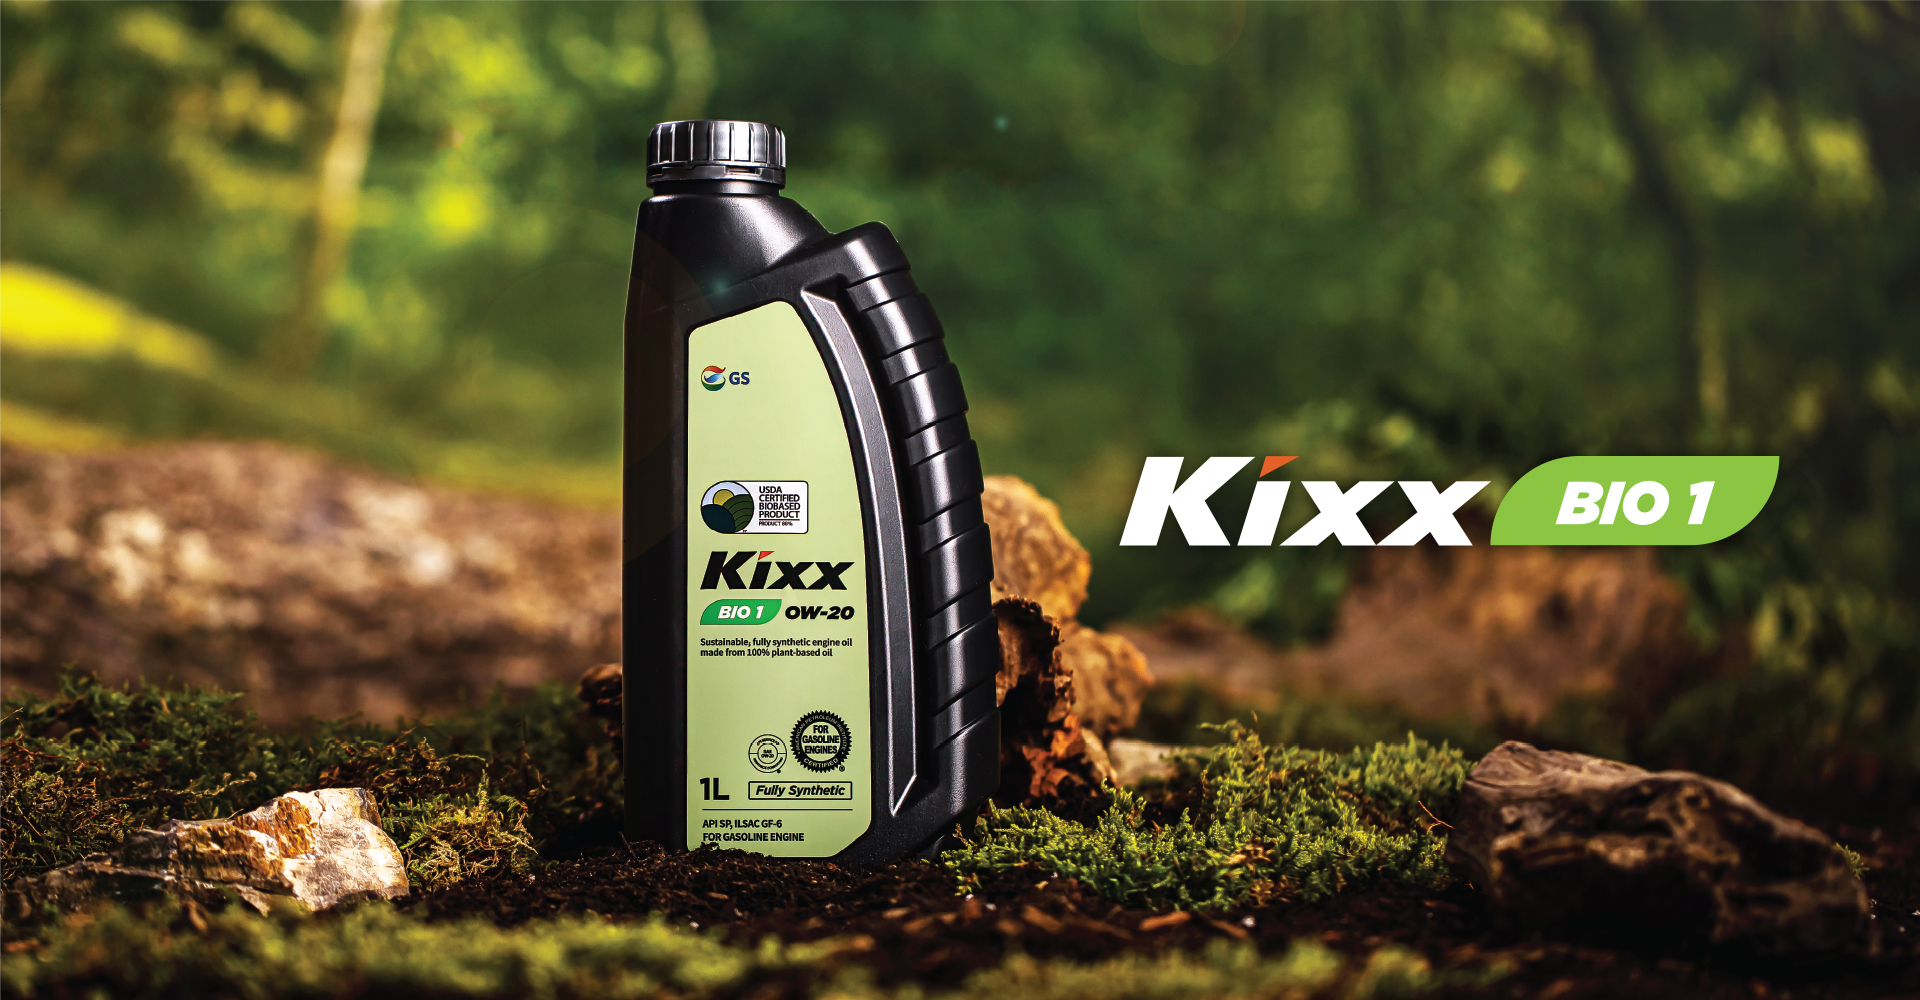 Kixx BIO1 is the plant-based engine oil. 